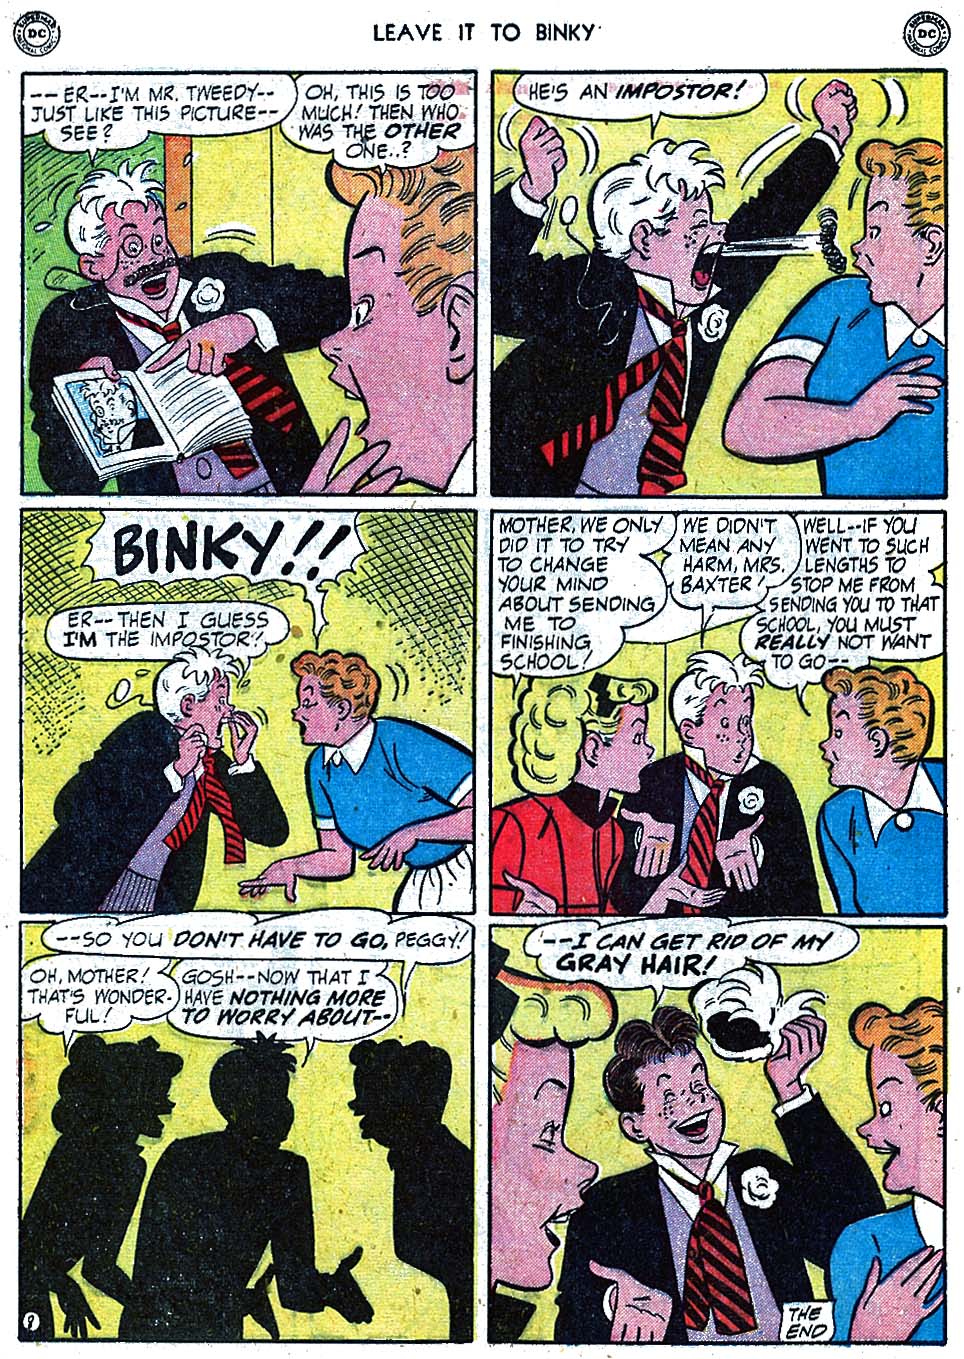 Read online Leave it to Binky comic -  Issue #19 - 10